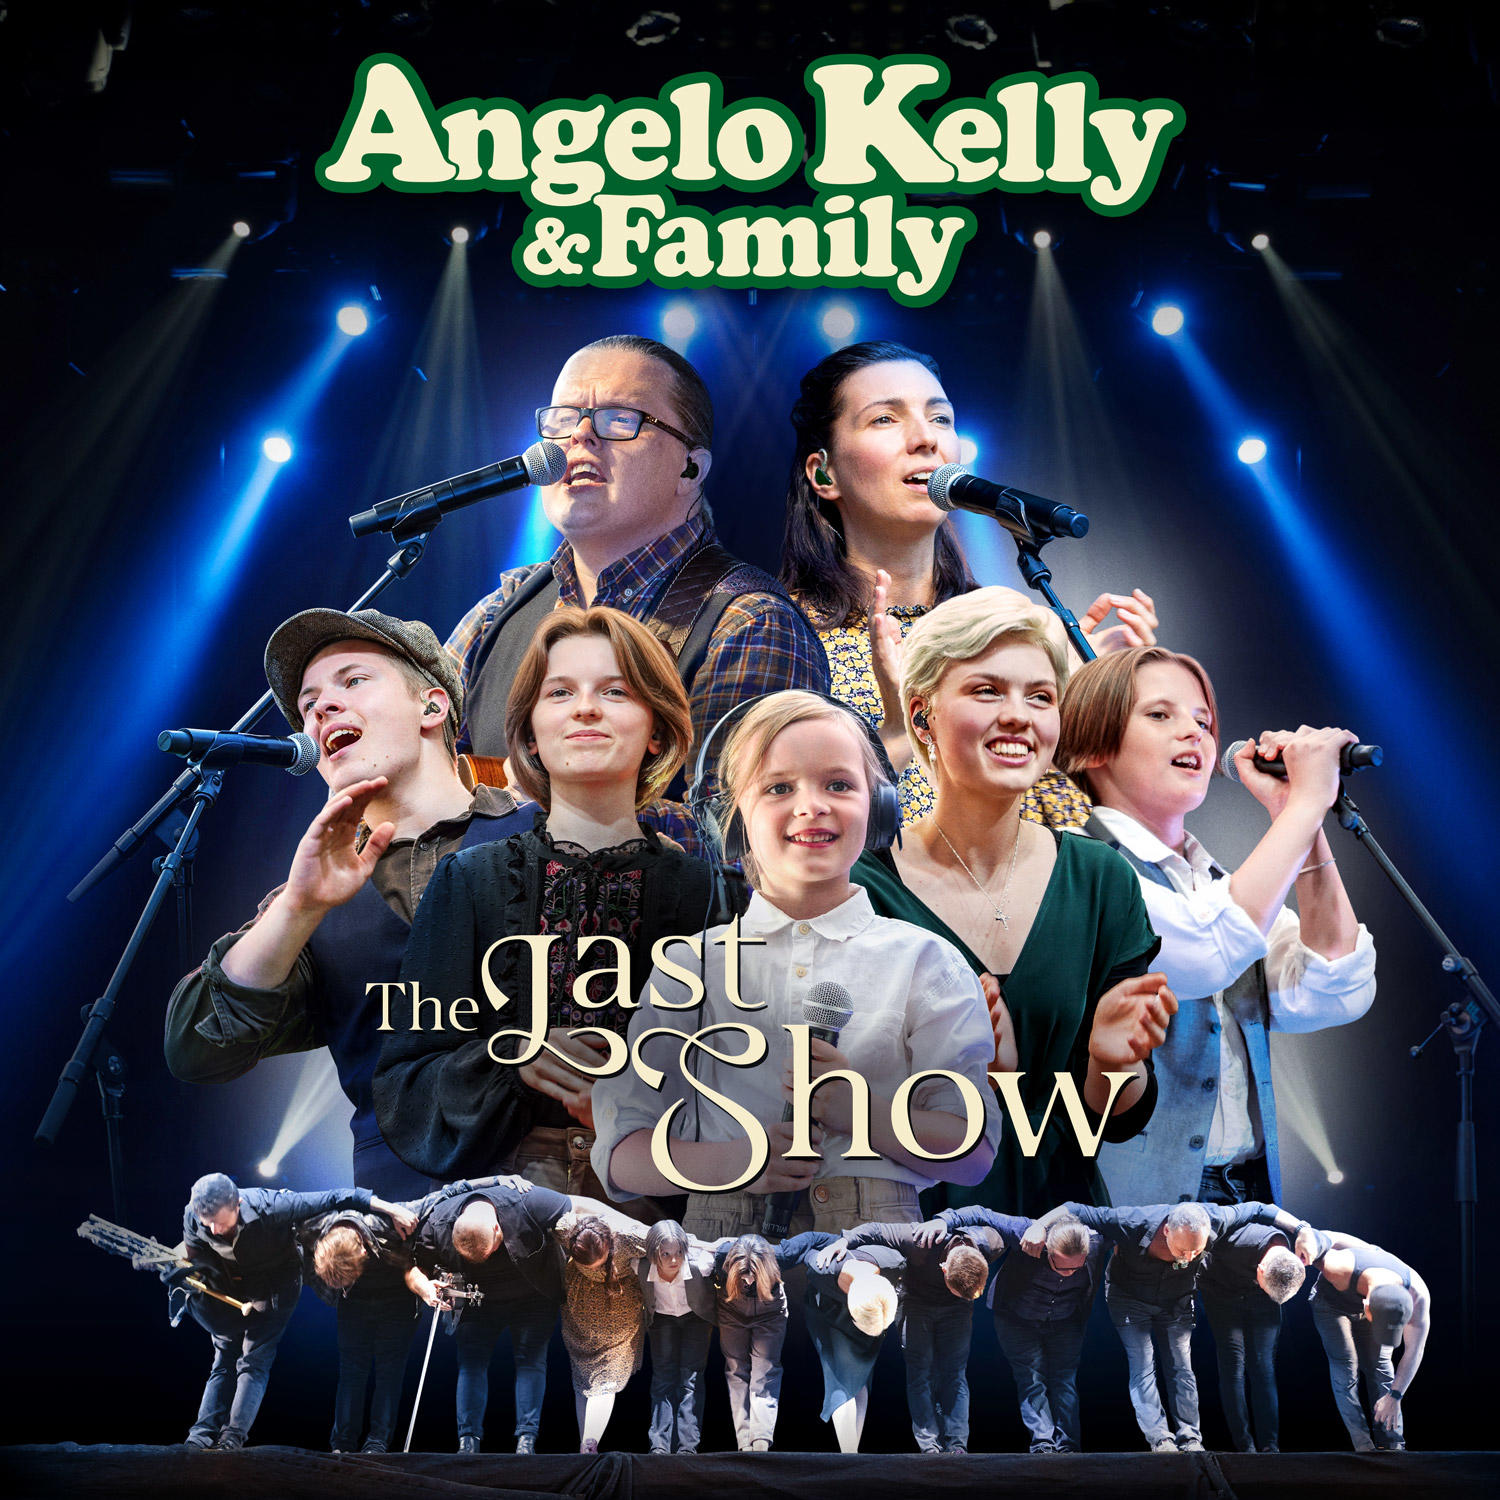 - Show (CD) Last & - The Family Angelo Kelly